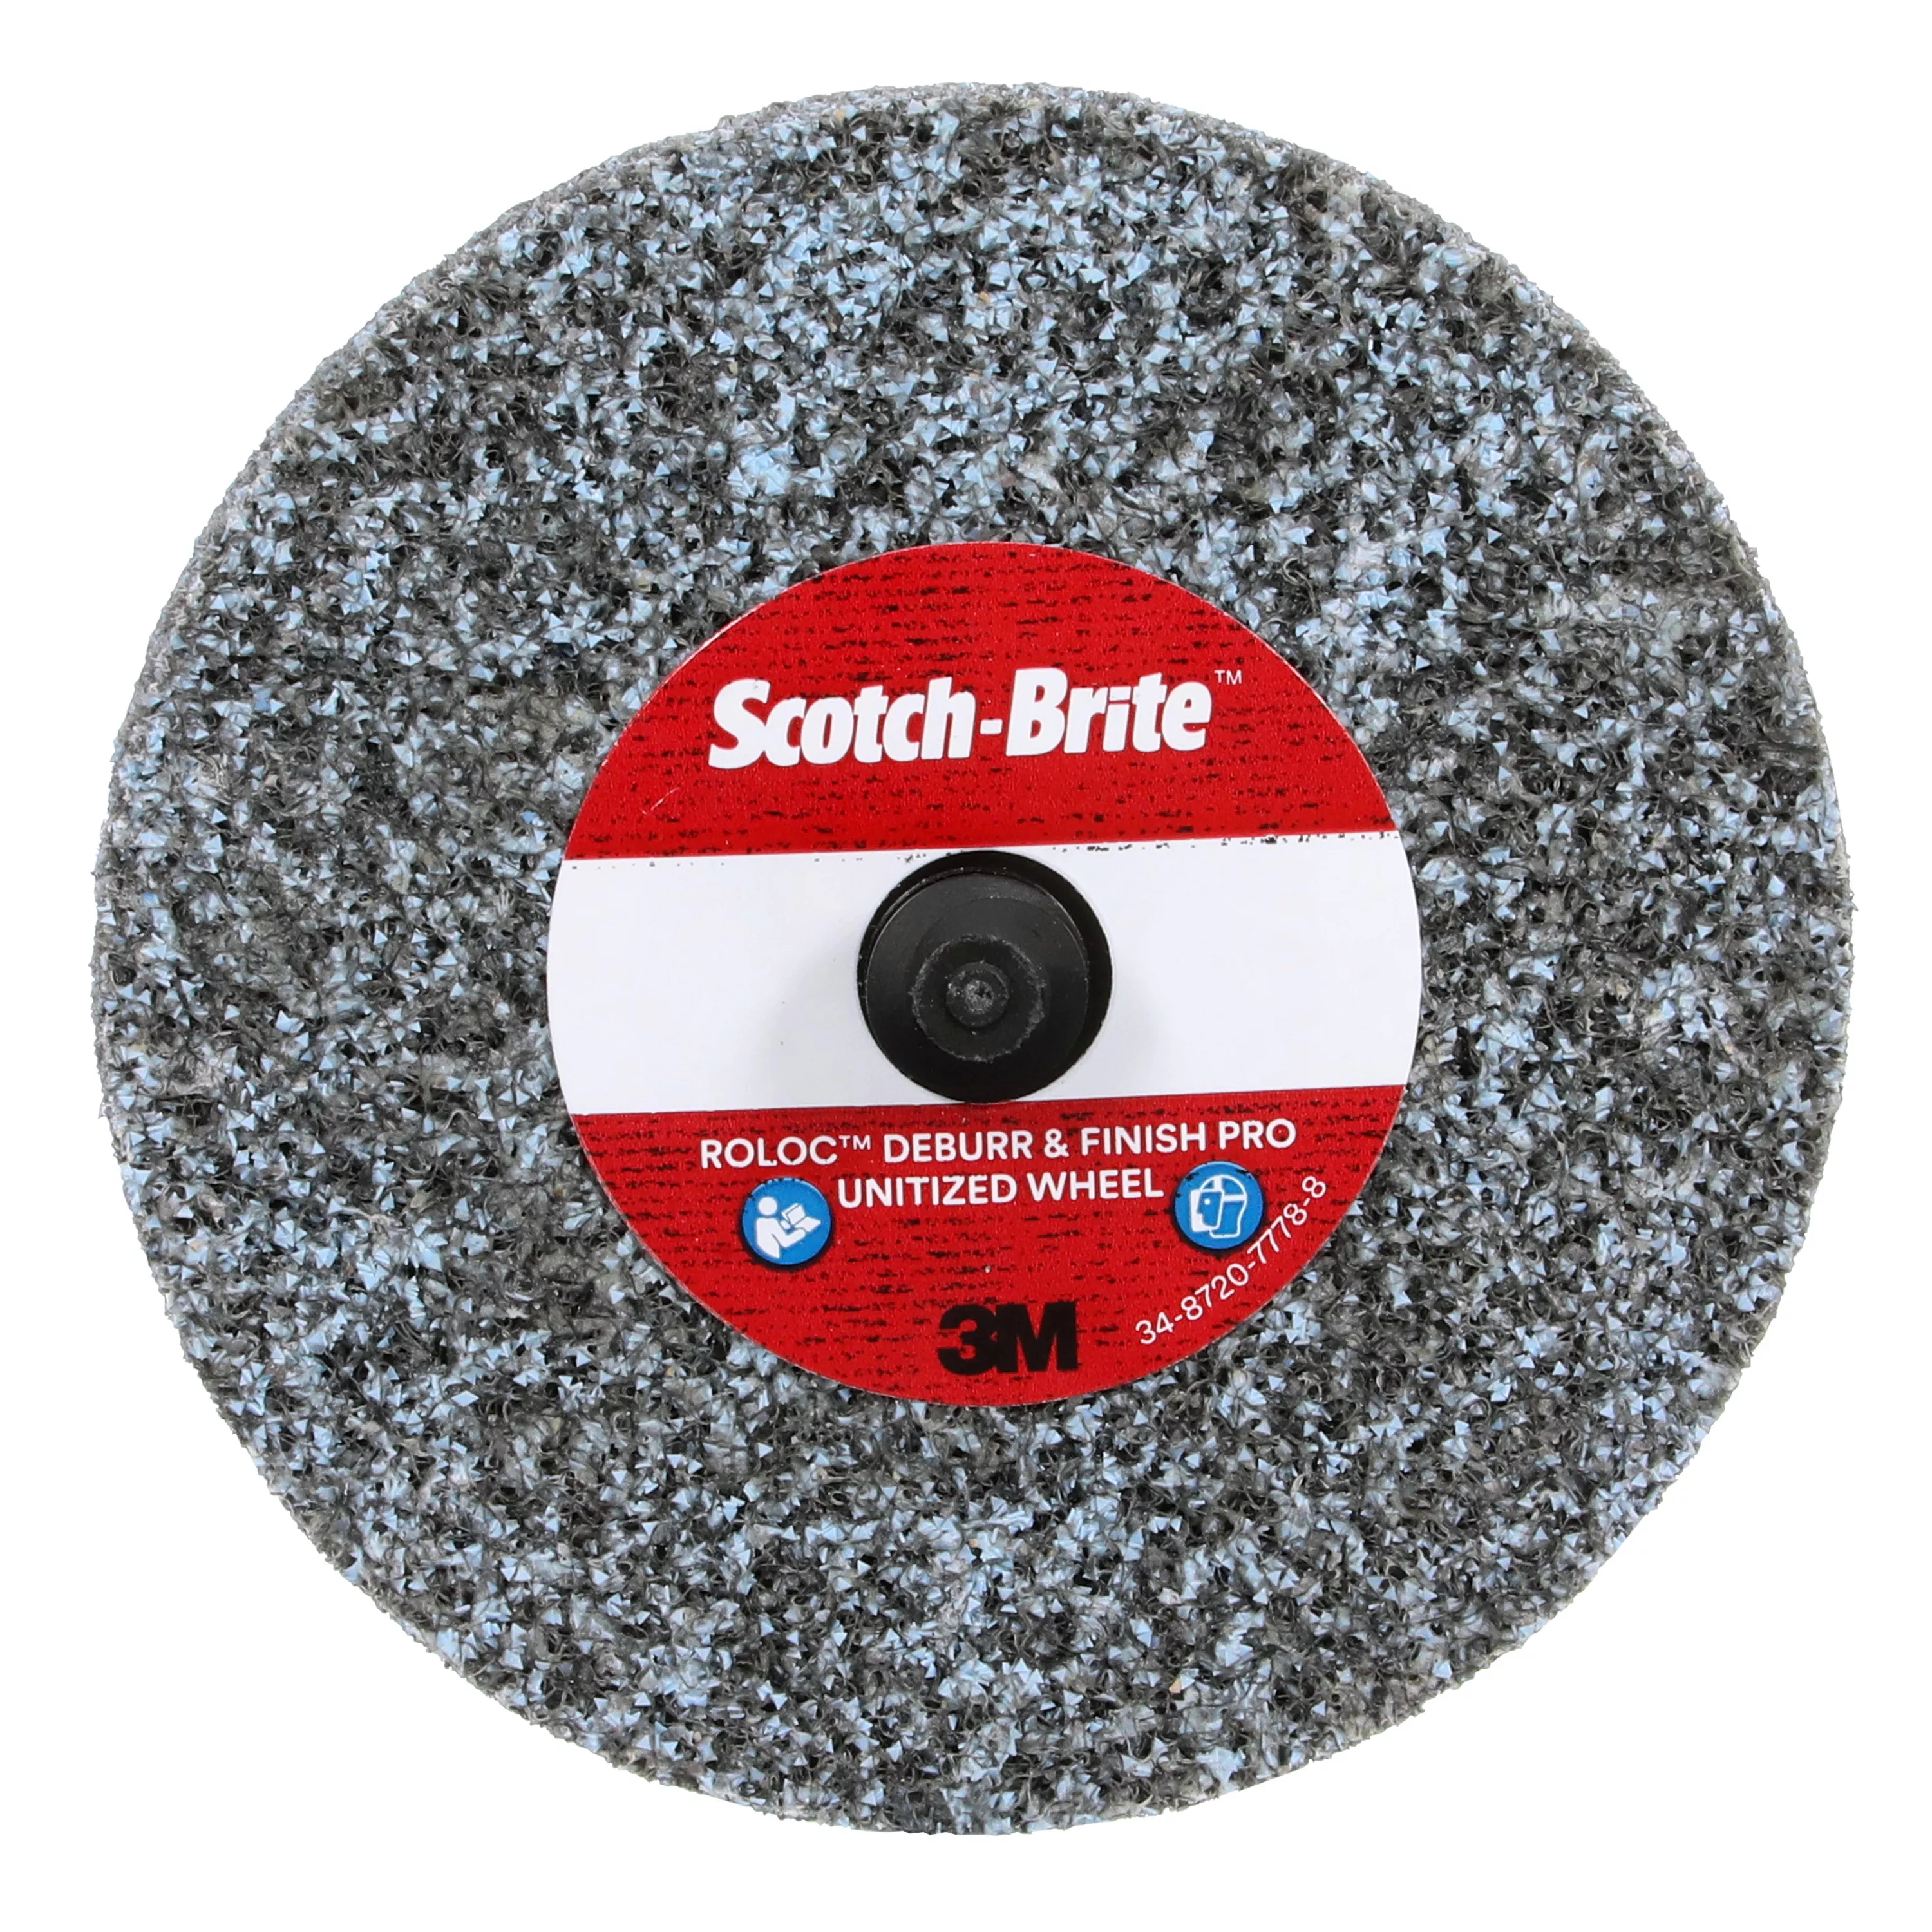 SKU 7100109130 | Scotch Brite™ Roloc™ Deburr & Finish PRO Unitized Wheel